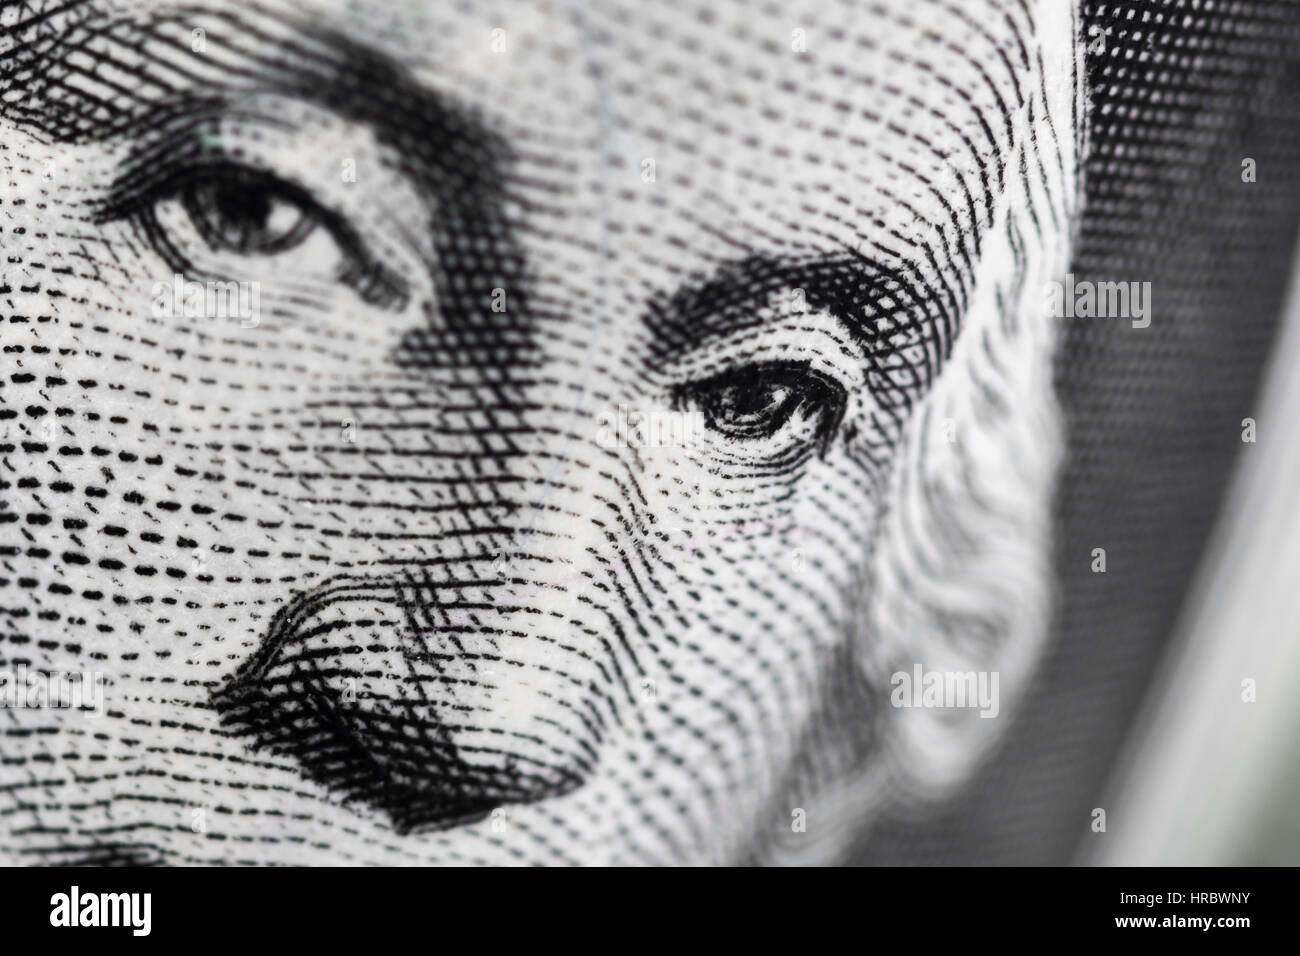 Macro-photo of George Washington's face on US $1 / one dollar bill. For US banking crisis. Stock Photo